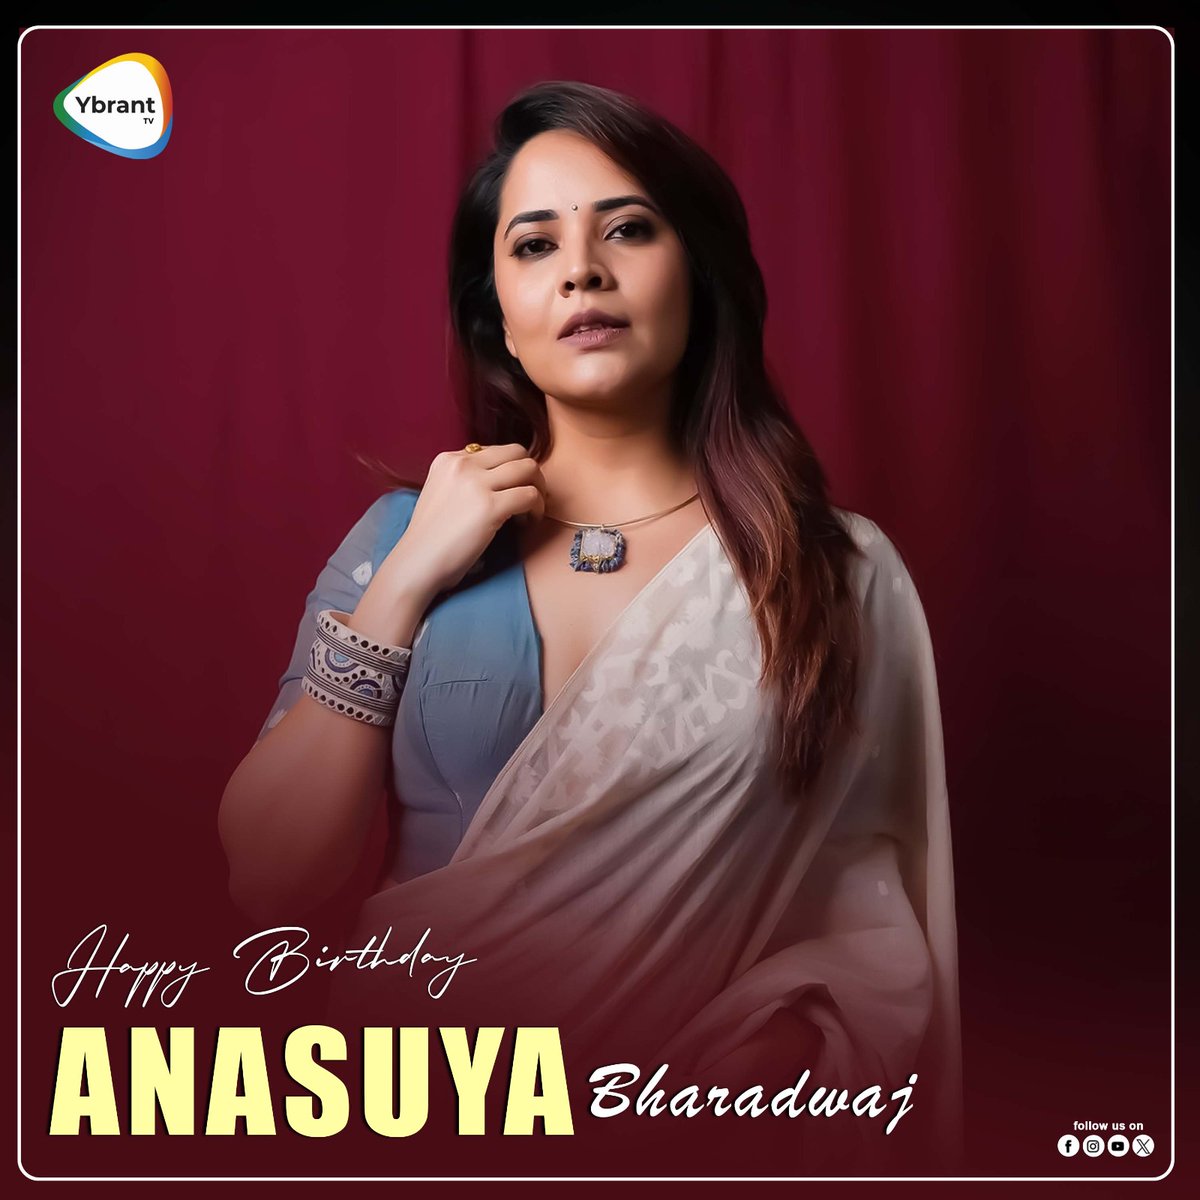 Join us in wishing the multi talented actress @anusuyakhasba a very Happy Birthday!!🎂🎉 We wish you a superb year ahead!!❤️🤩

#HappyBirthdayAnasuyaBharadwaj #HBDAnasuyaBharadwaj #YbrantTv